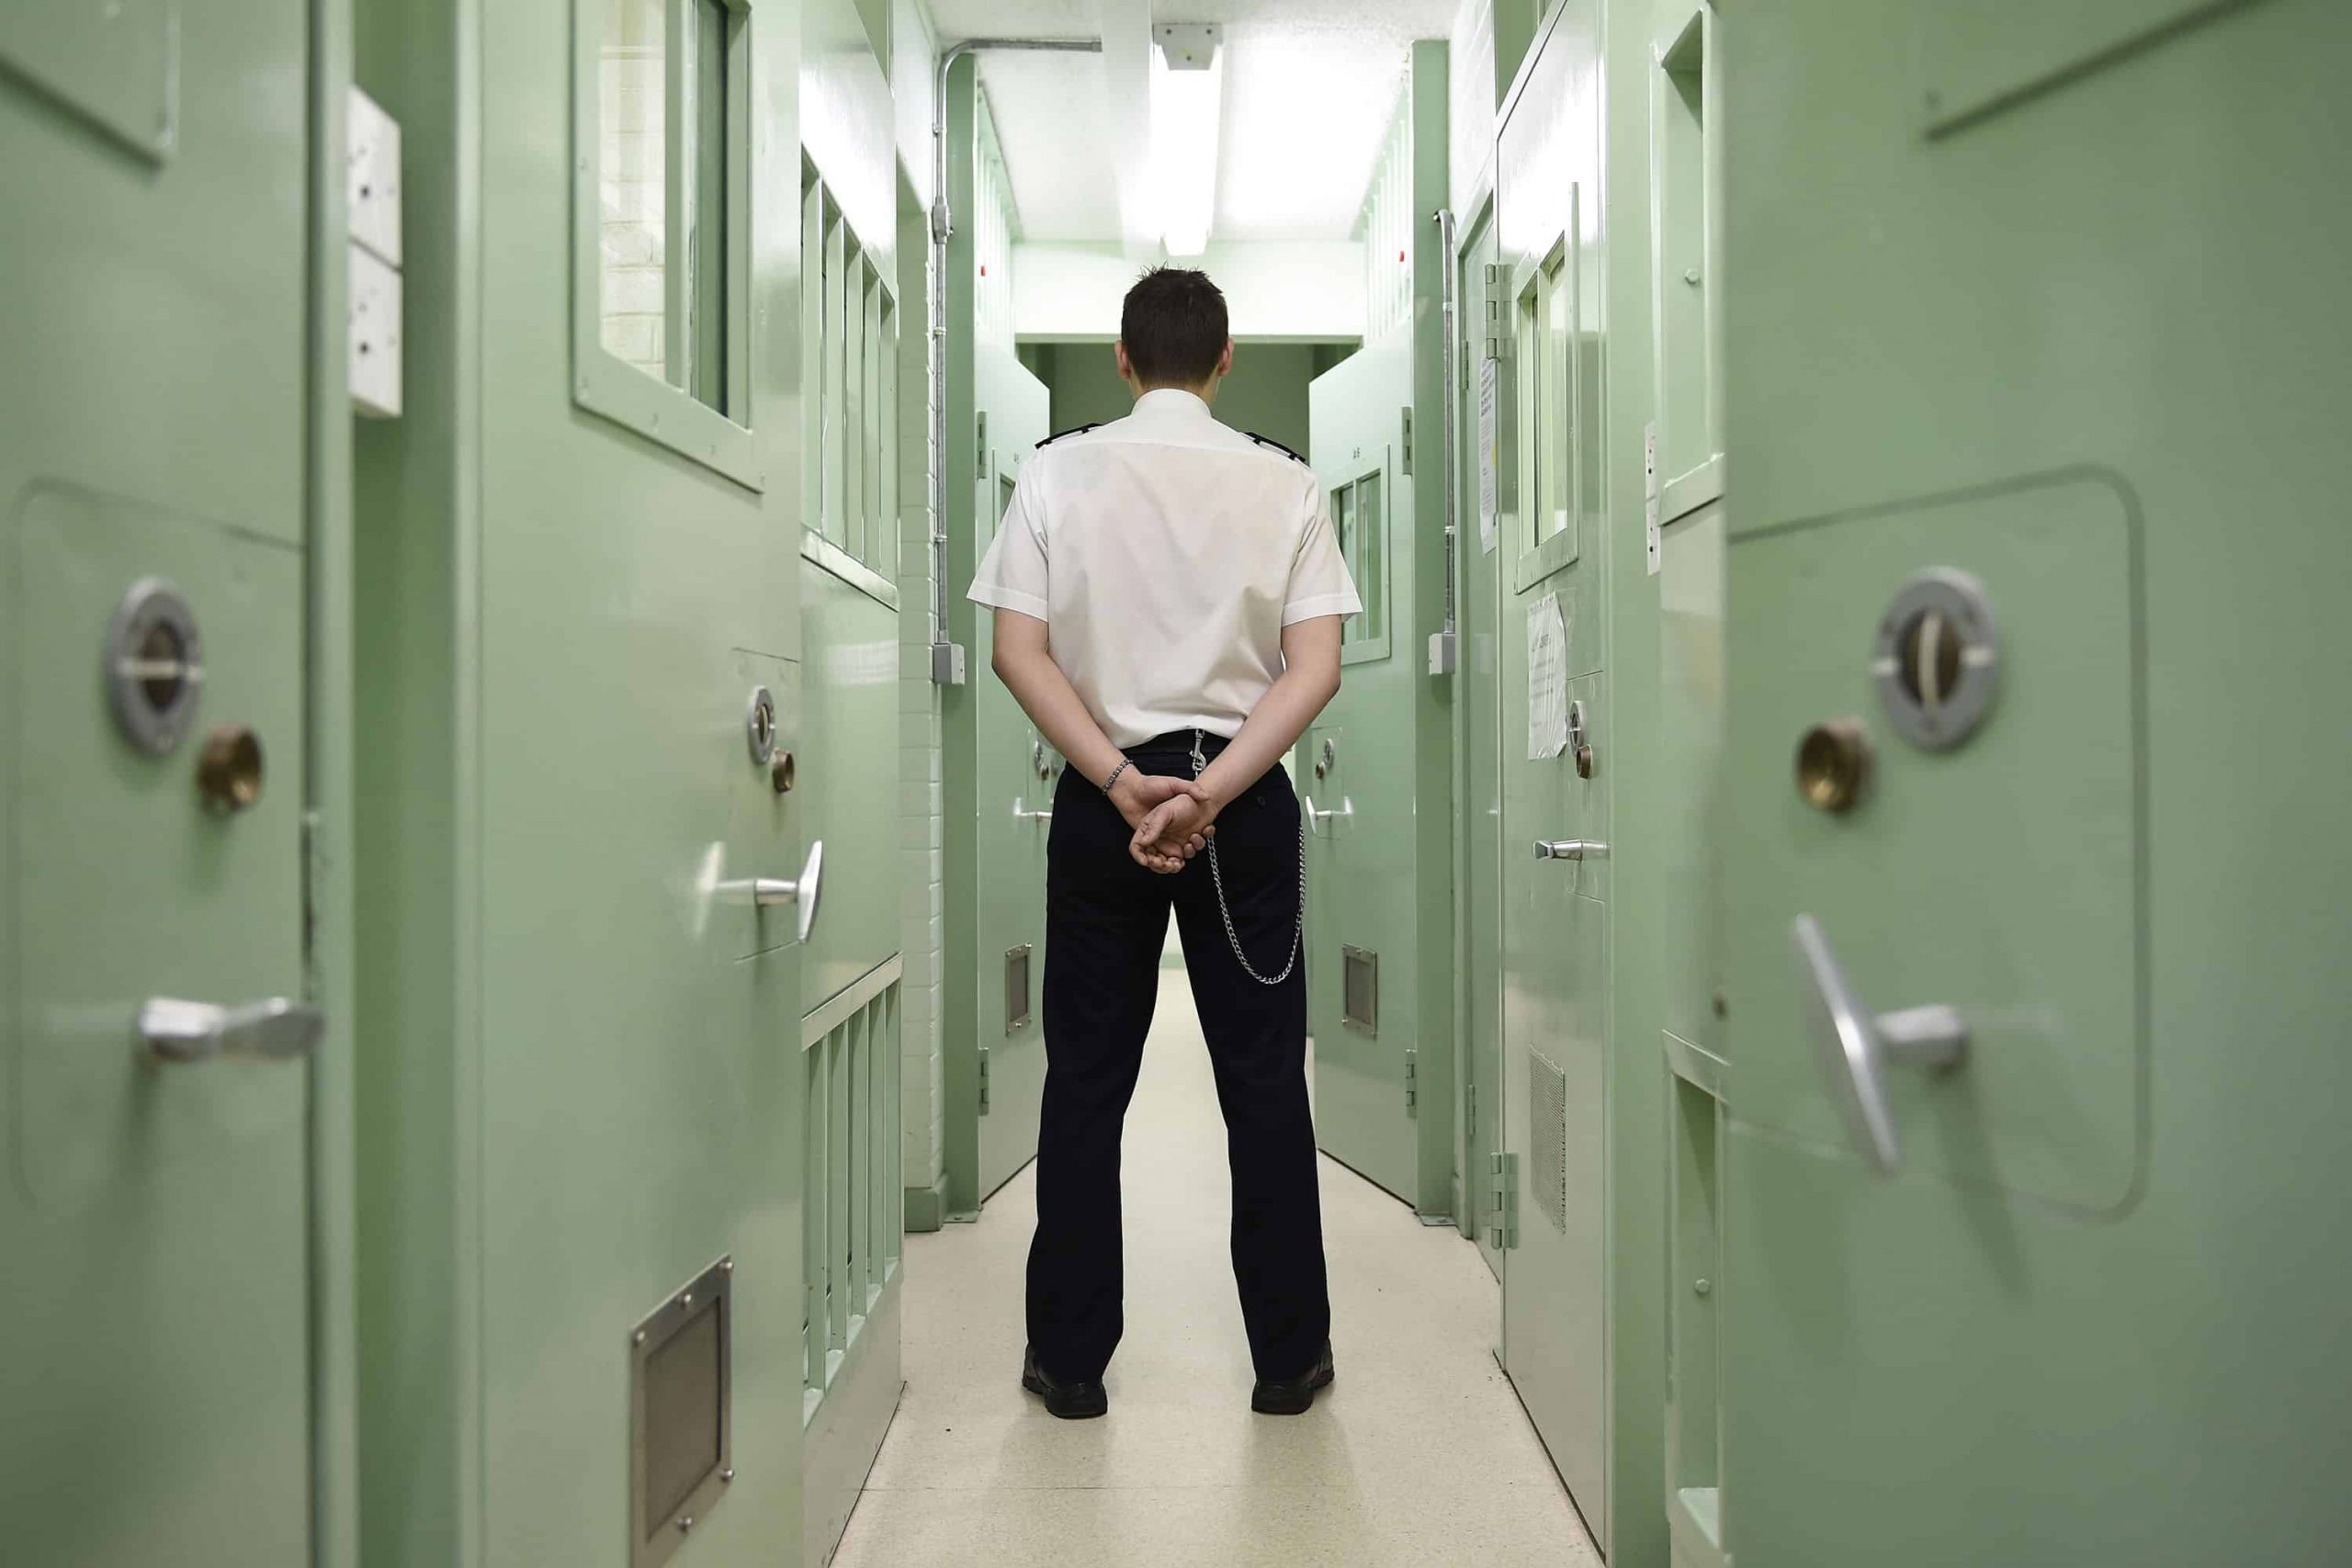 Coronavirus UK – Two inmates at prison test positive